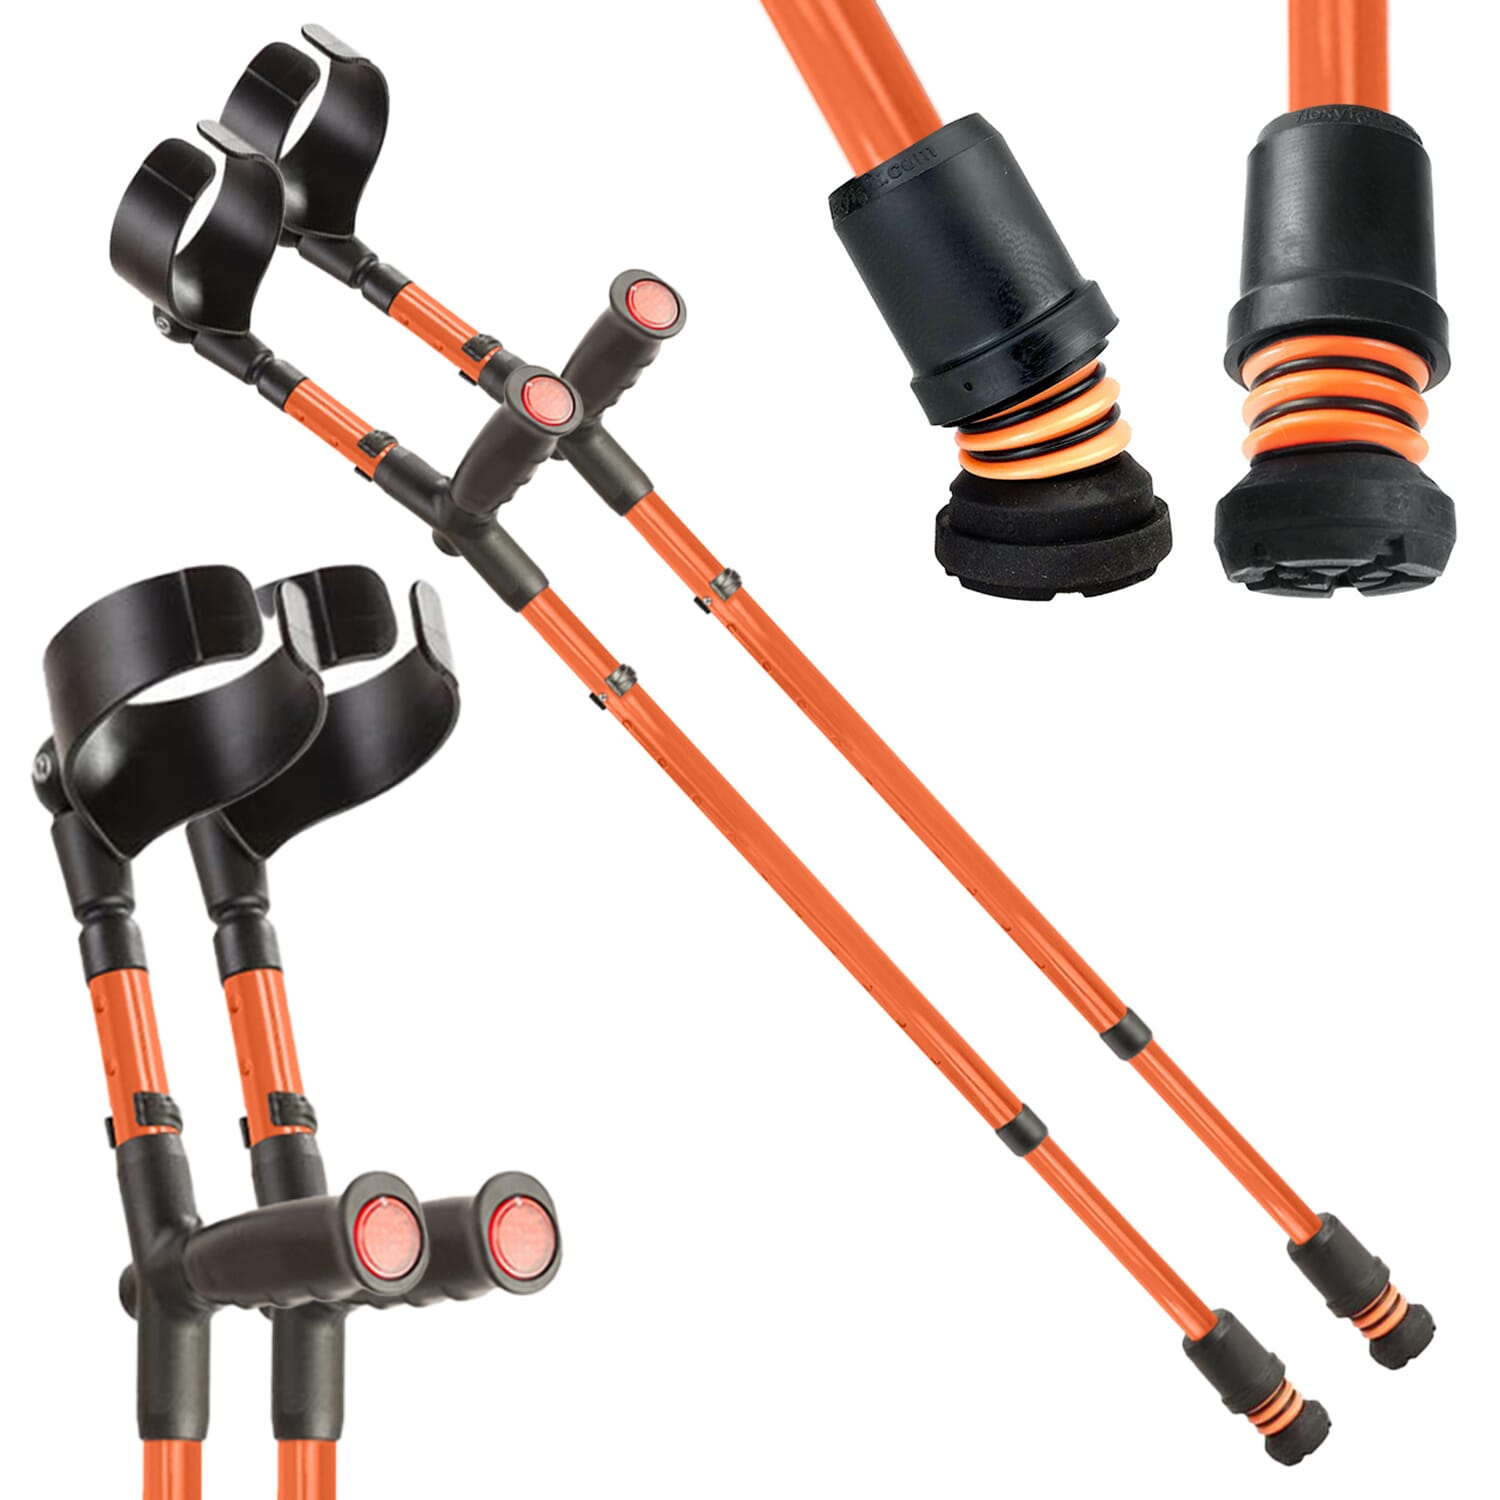 View Flexyfoot Soft Grip Double Adjustable Crutches Orange Pair information